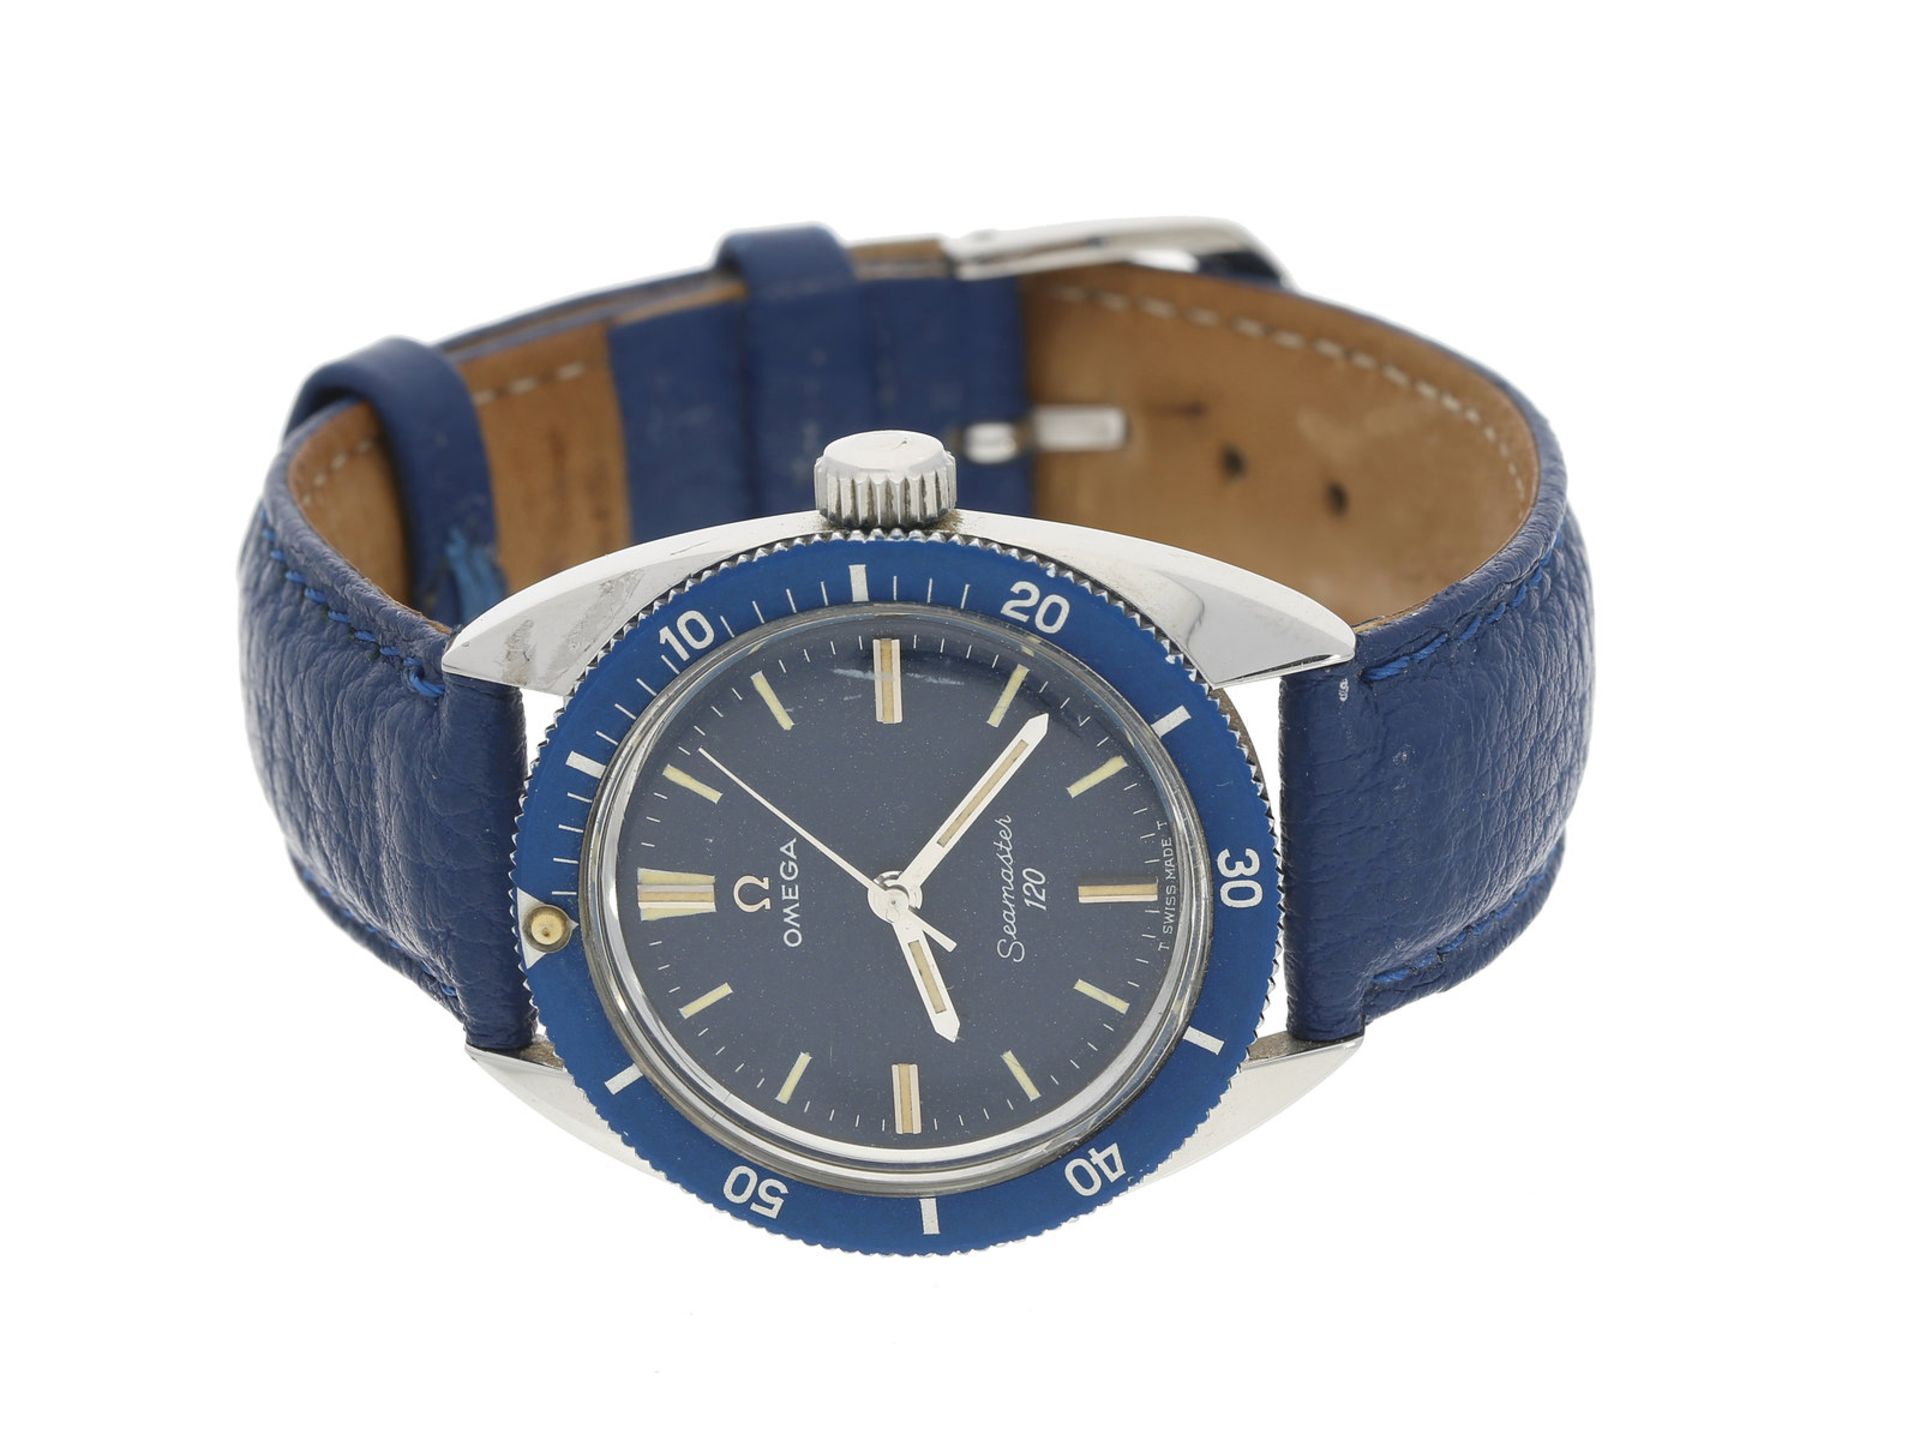 Armbanduhr: sehr seltene vintage Taucheruhr von Omega, Omega " Seamaster 120" - "Blue", Ref.535-007,